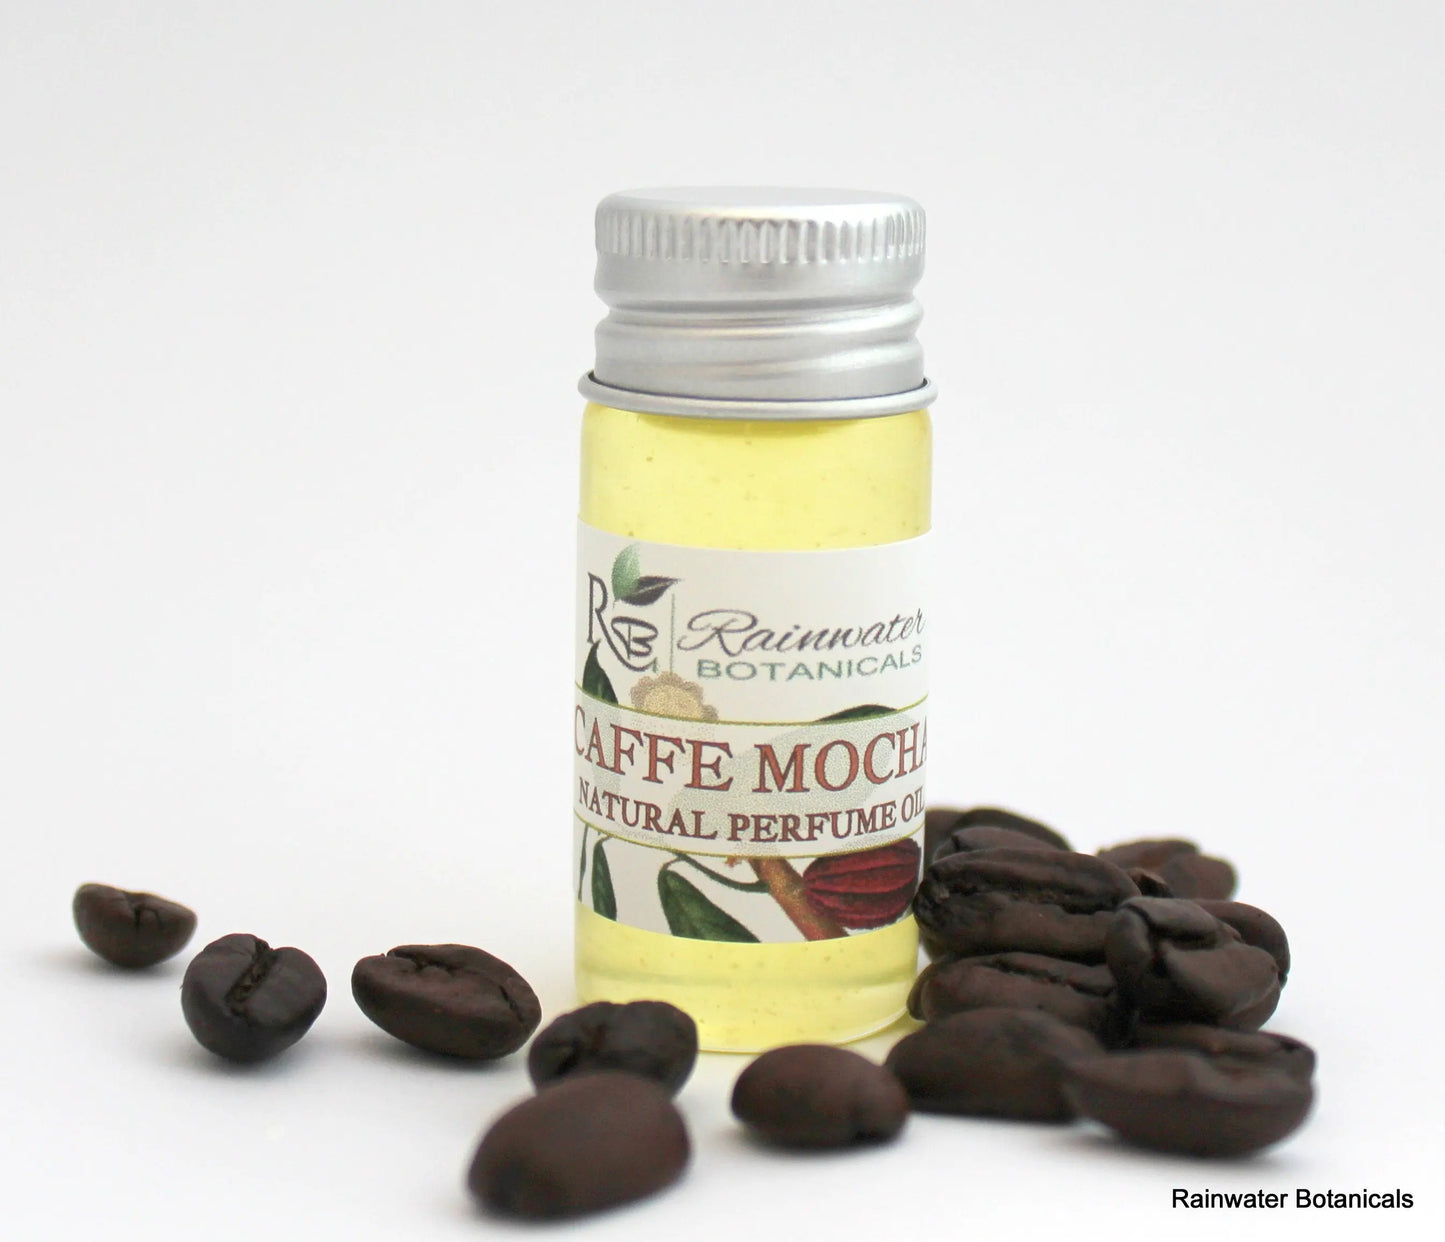 Caffe Mocha Natural Perfume